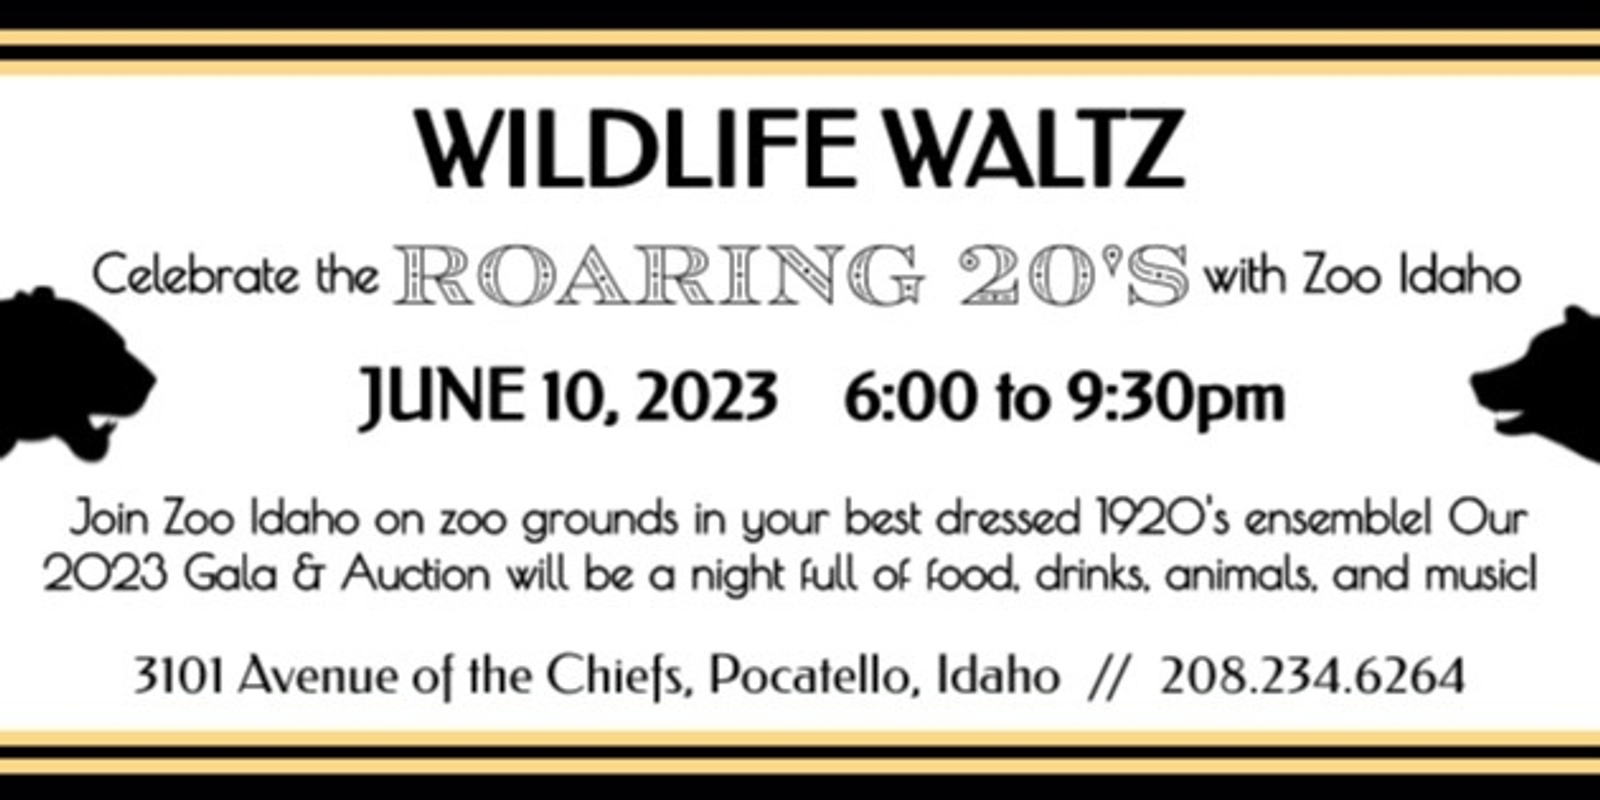 Wildlife Waltz- Roaring 20's